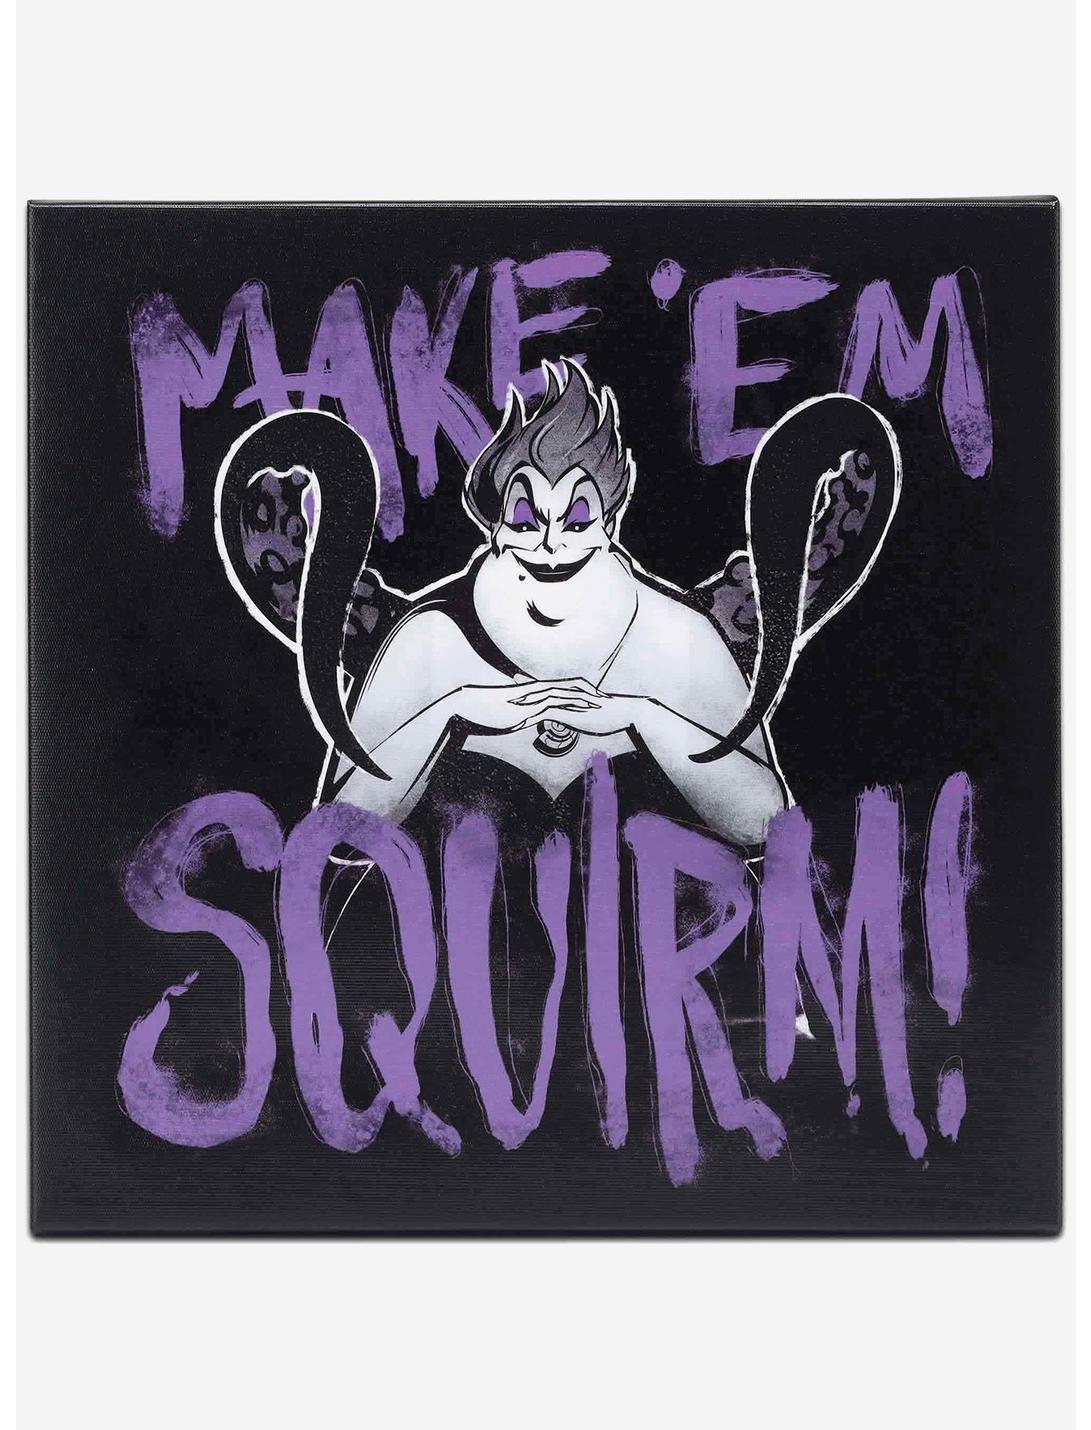 Disney Villains Ursula Make 'Em Squirm Canvas Wall Decor, , hi-res